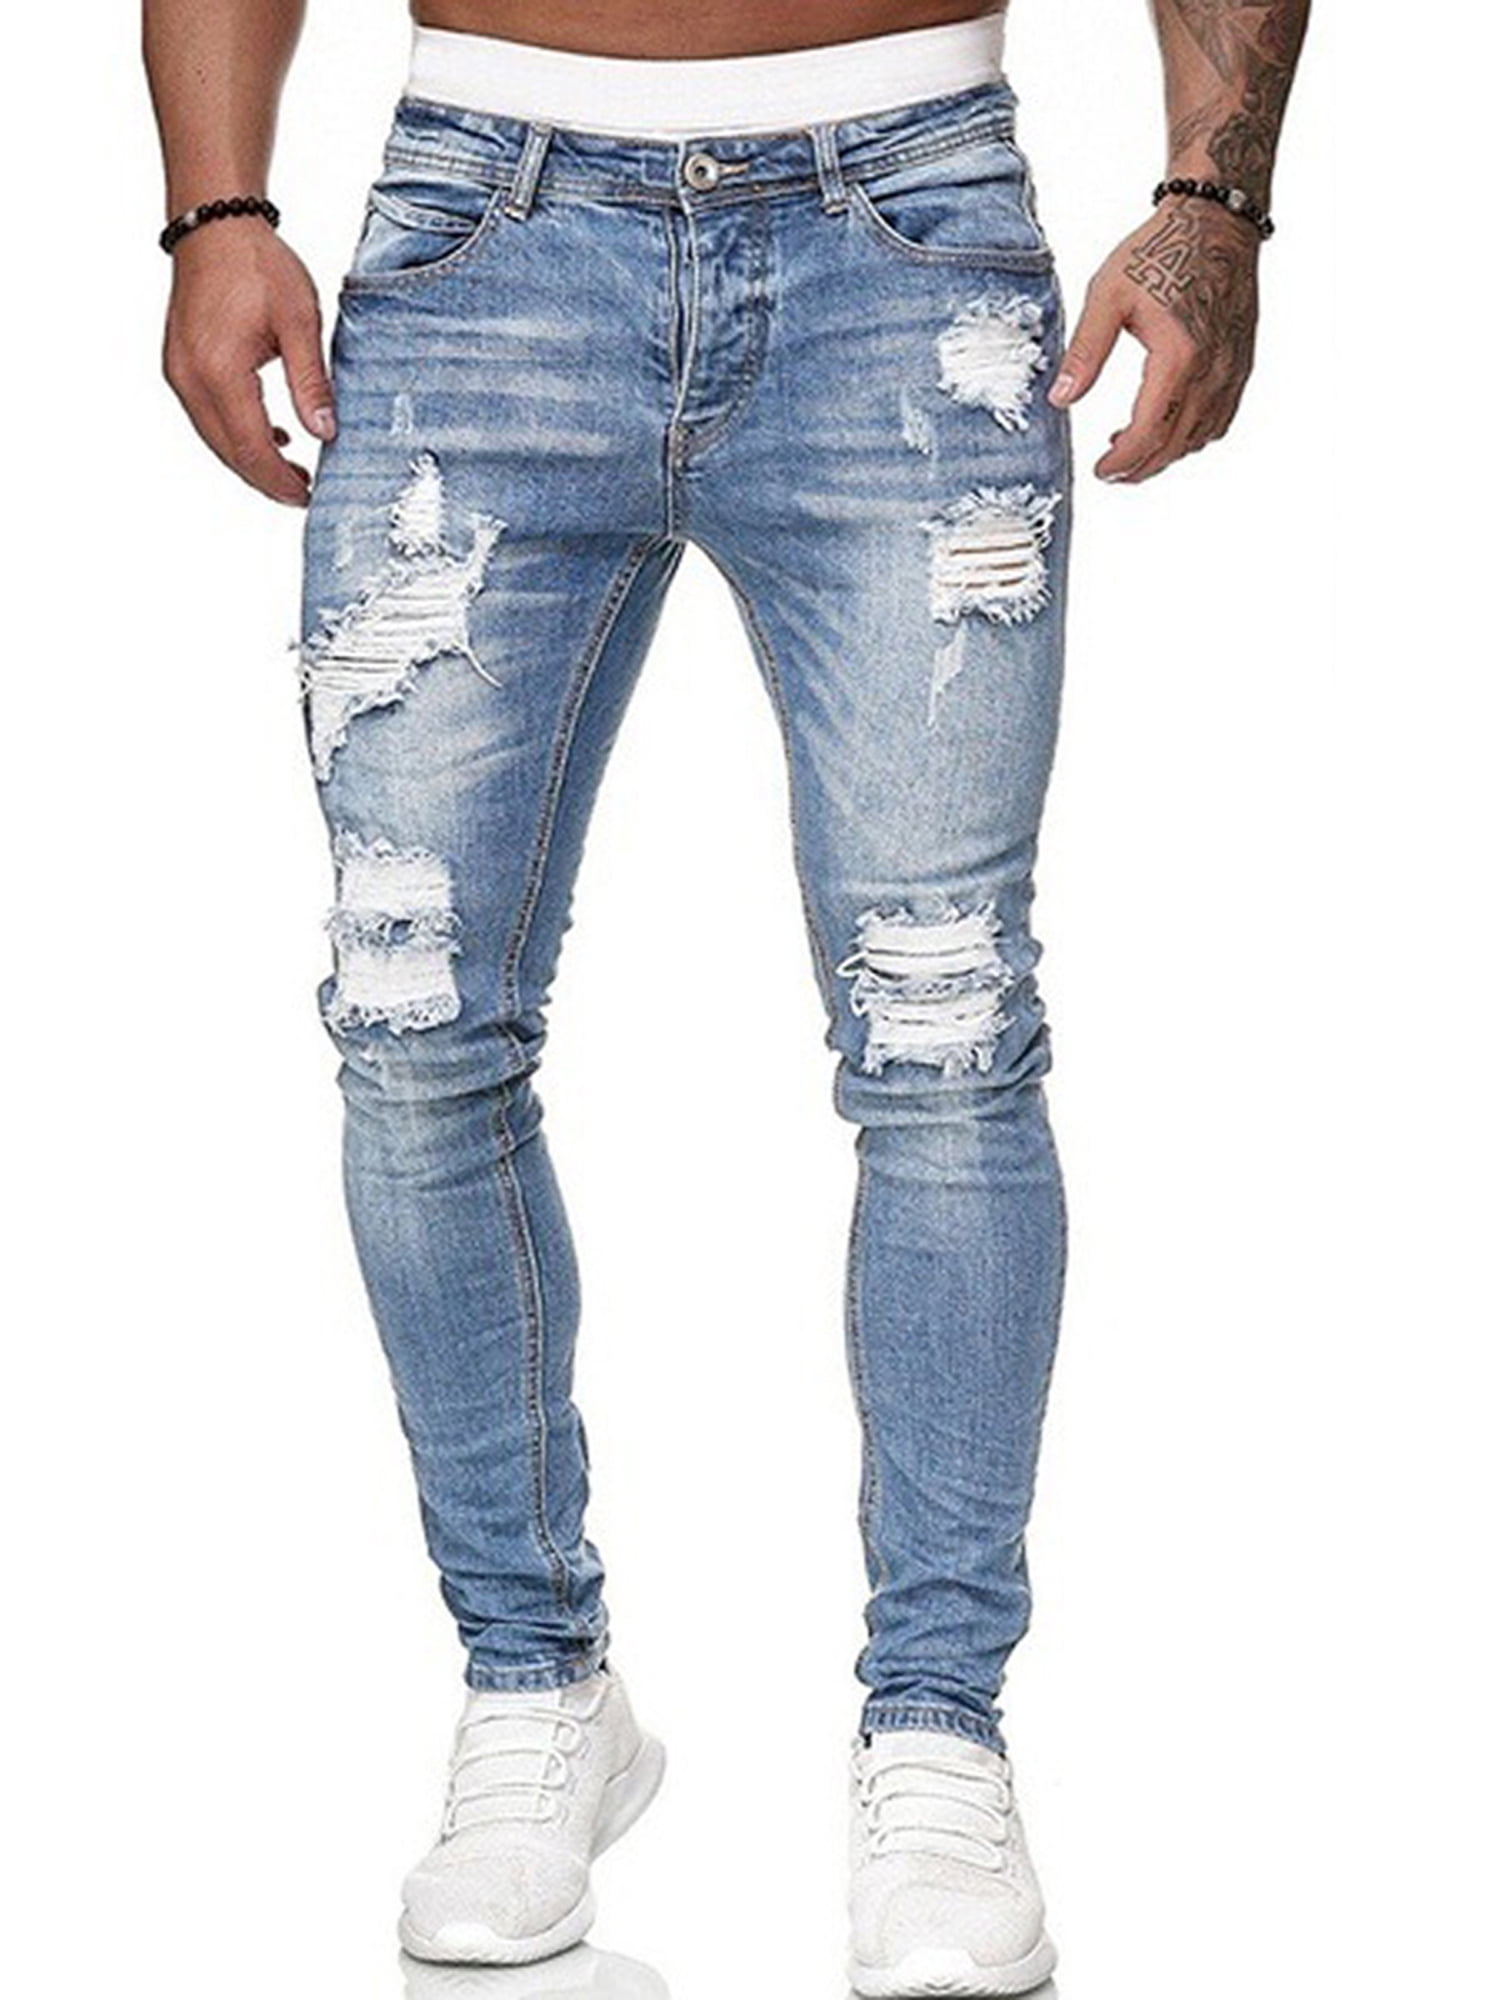 TheFound Men's Jeans Ripped Slim Fit Jeans Stretch Distressed Destroyed Skinny Zipper Leg Denim Pants Light Blue XL - Walmart.com